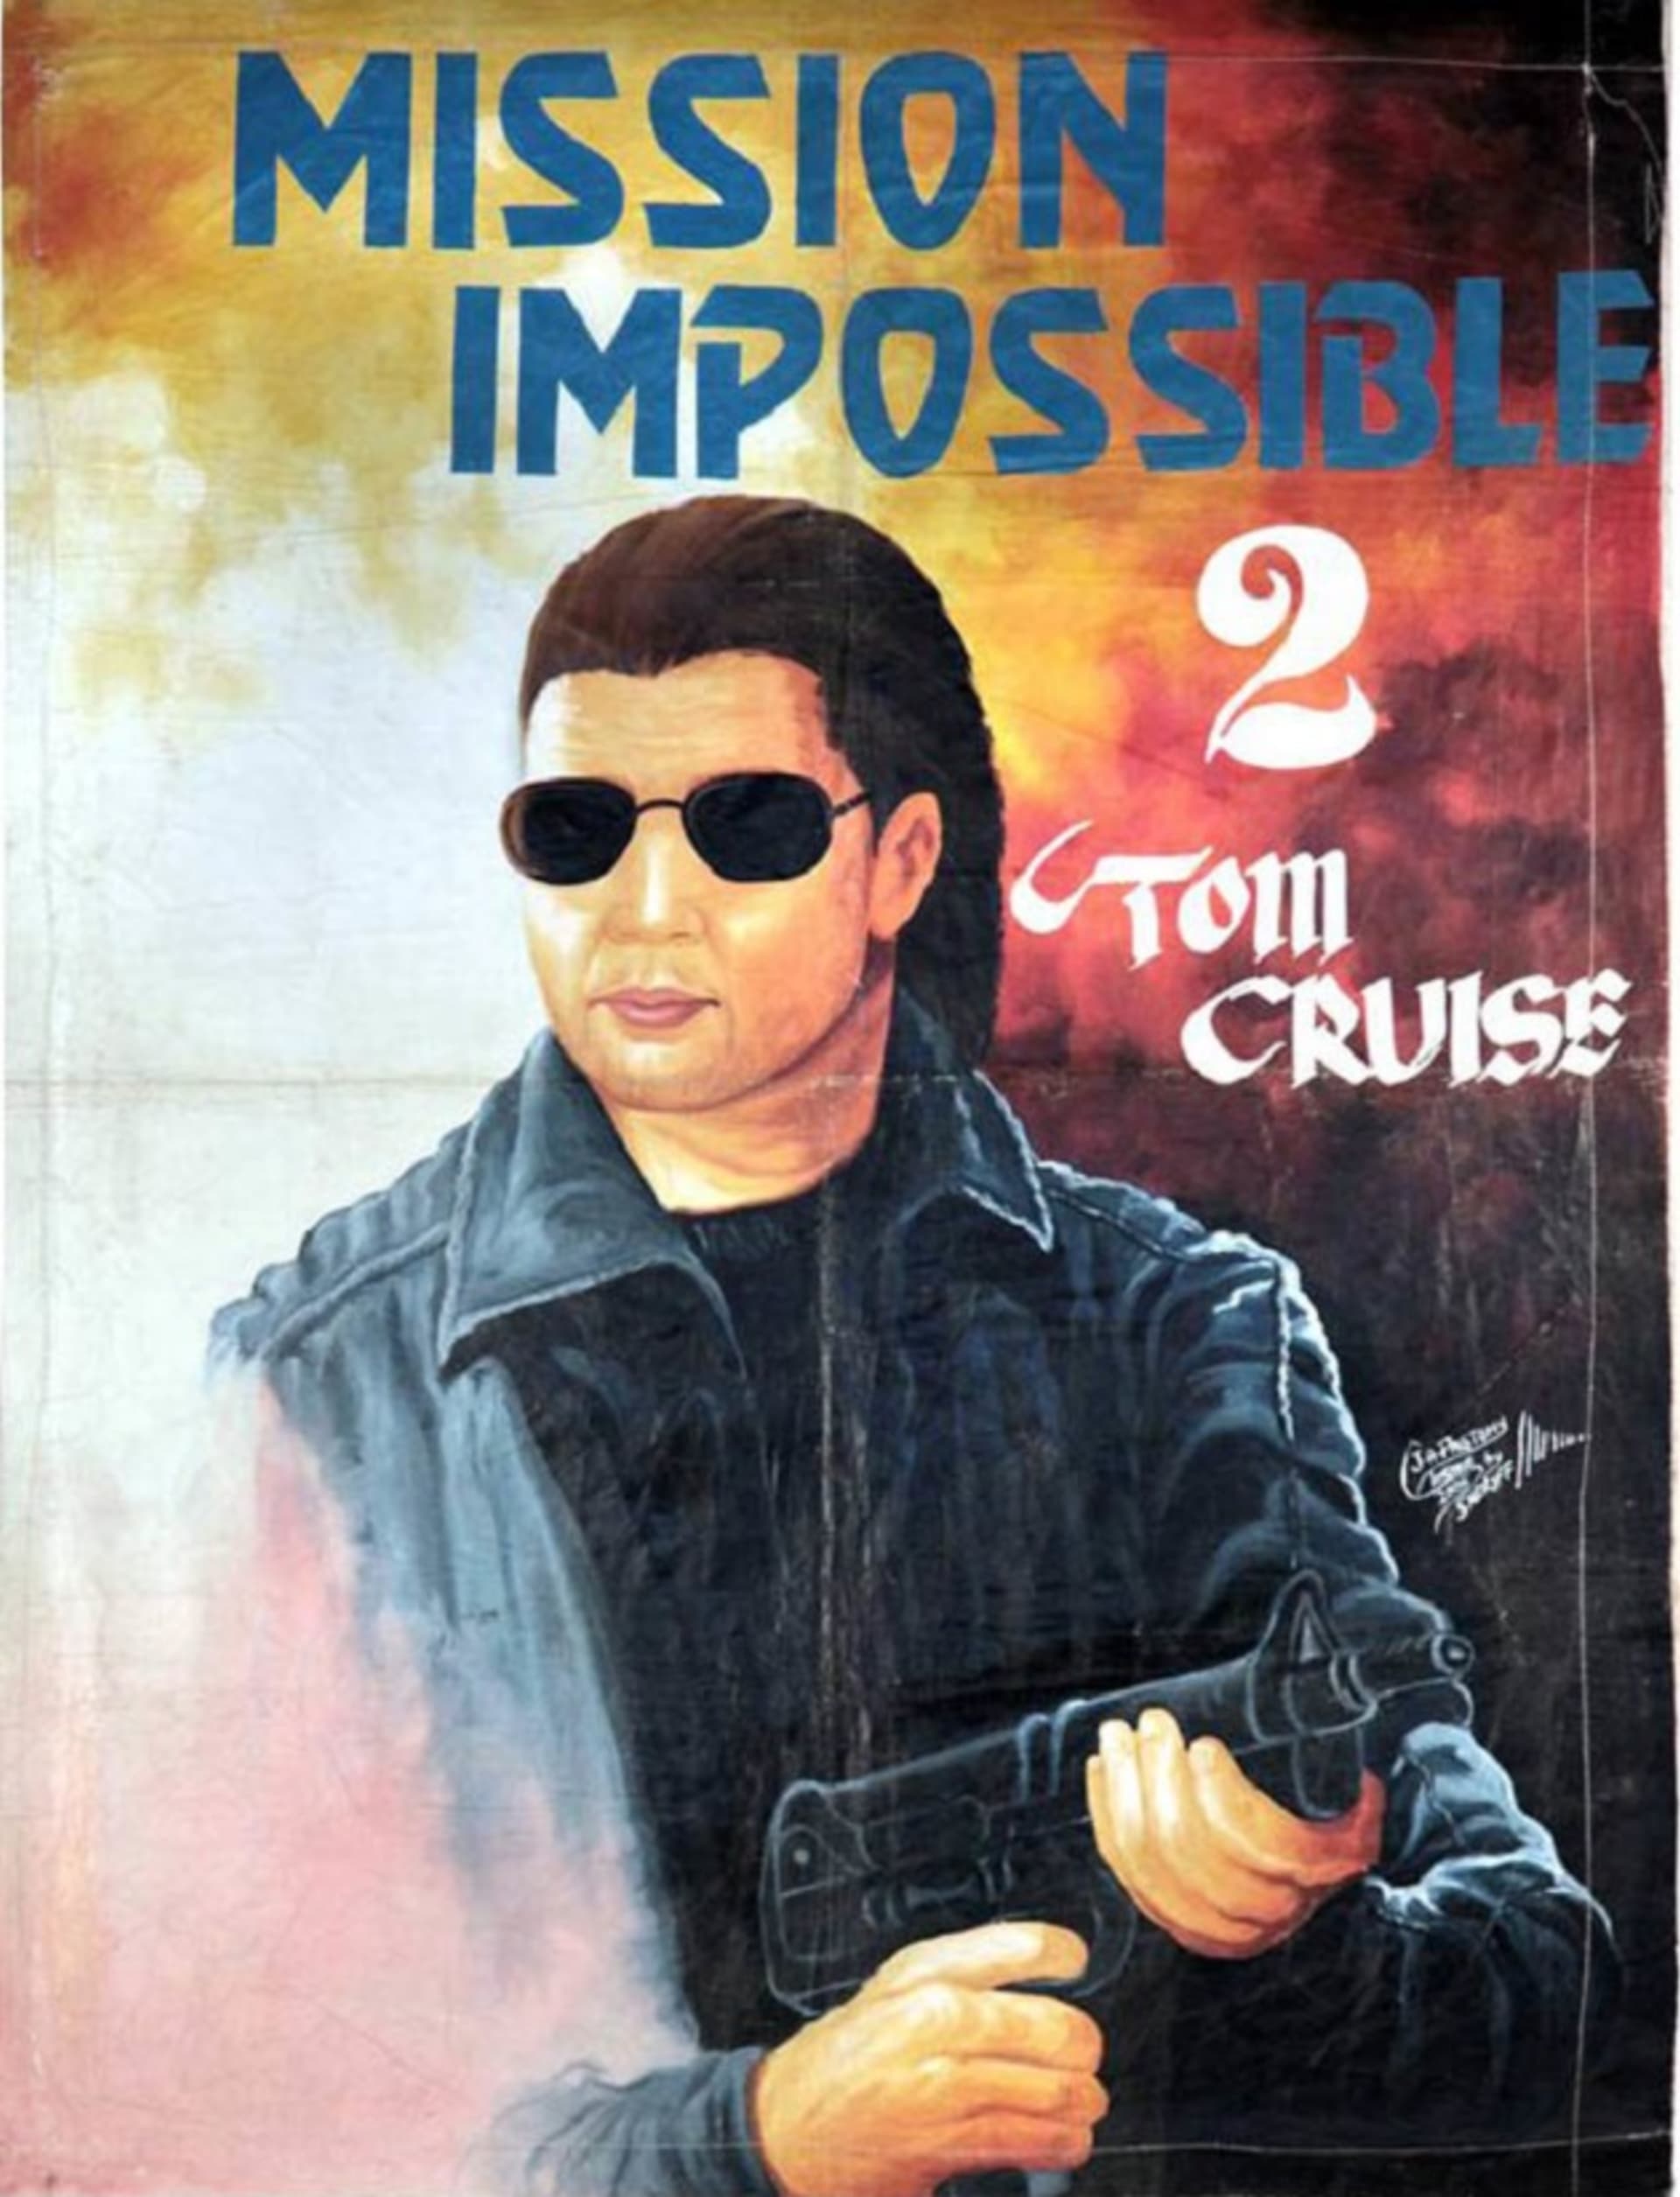 Poznali byste Toma Cruise?